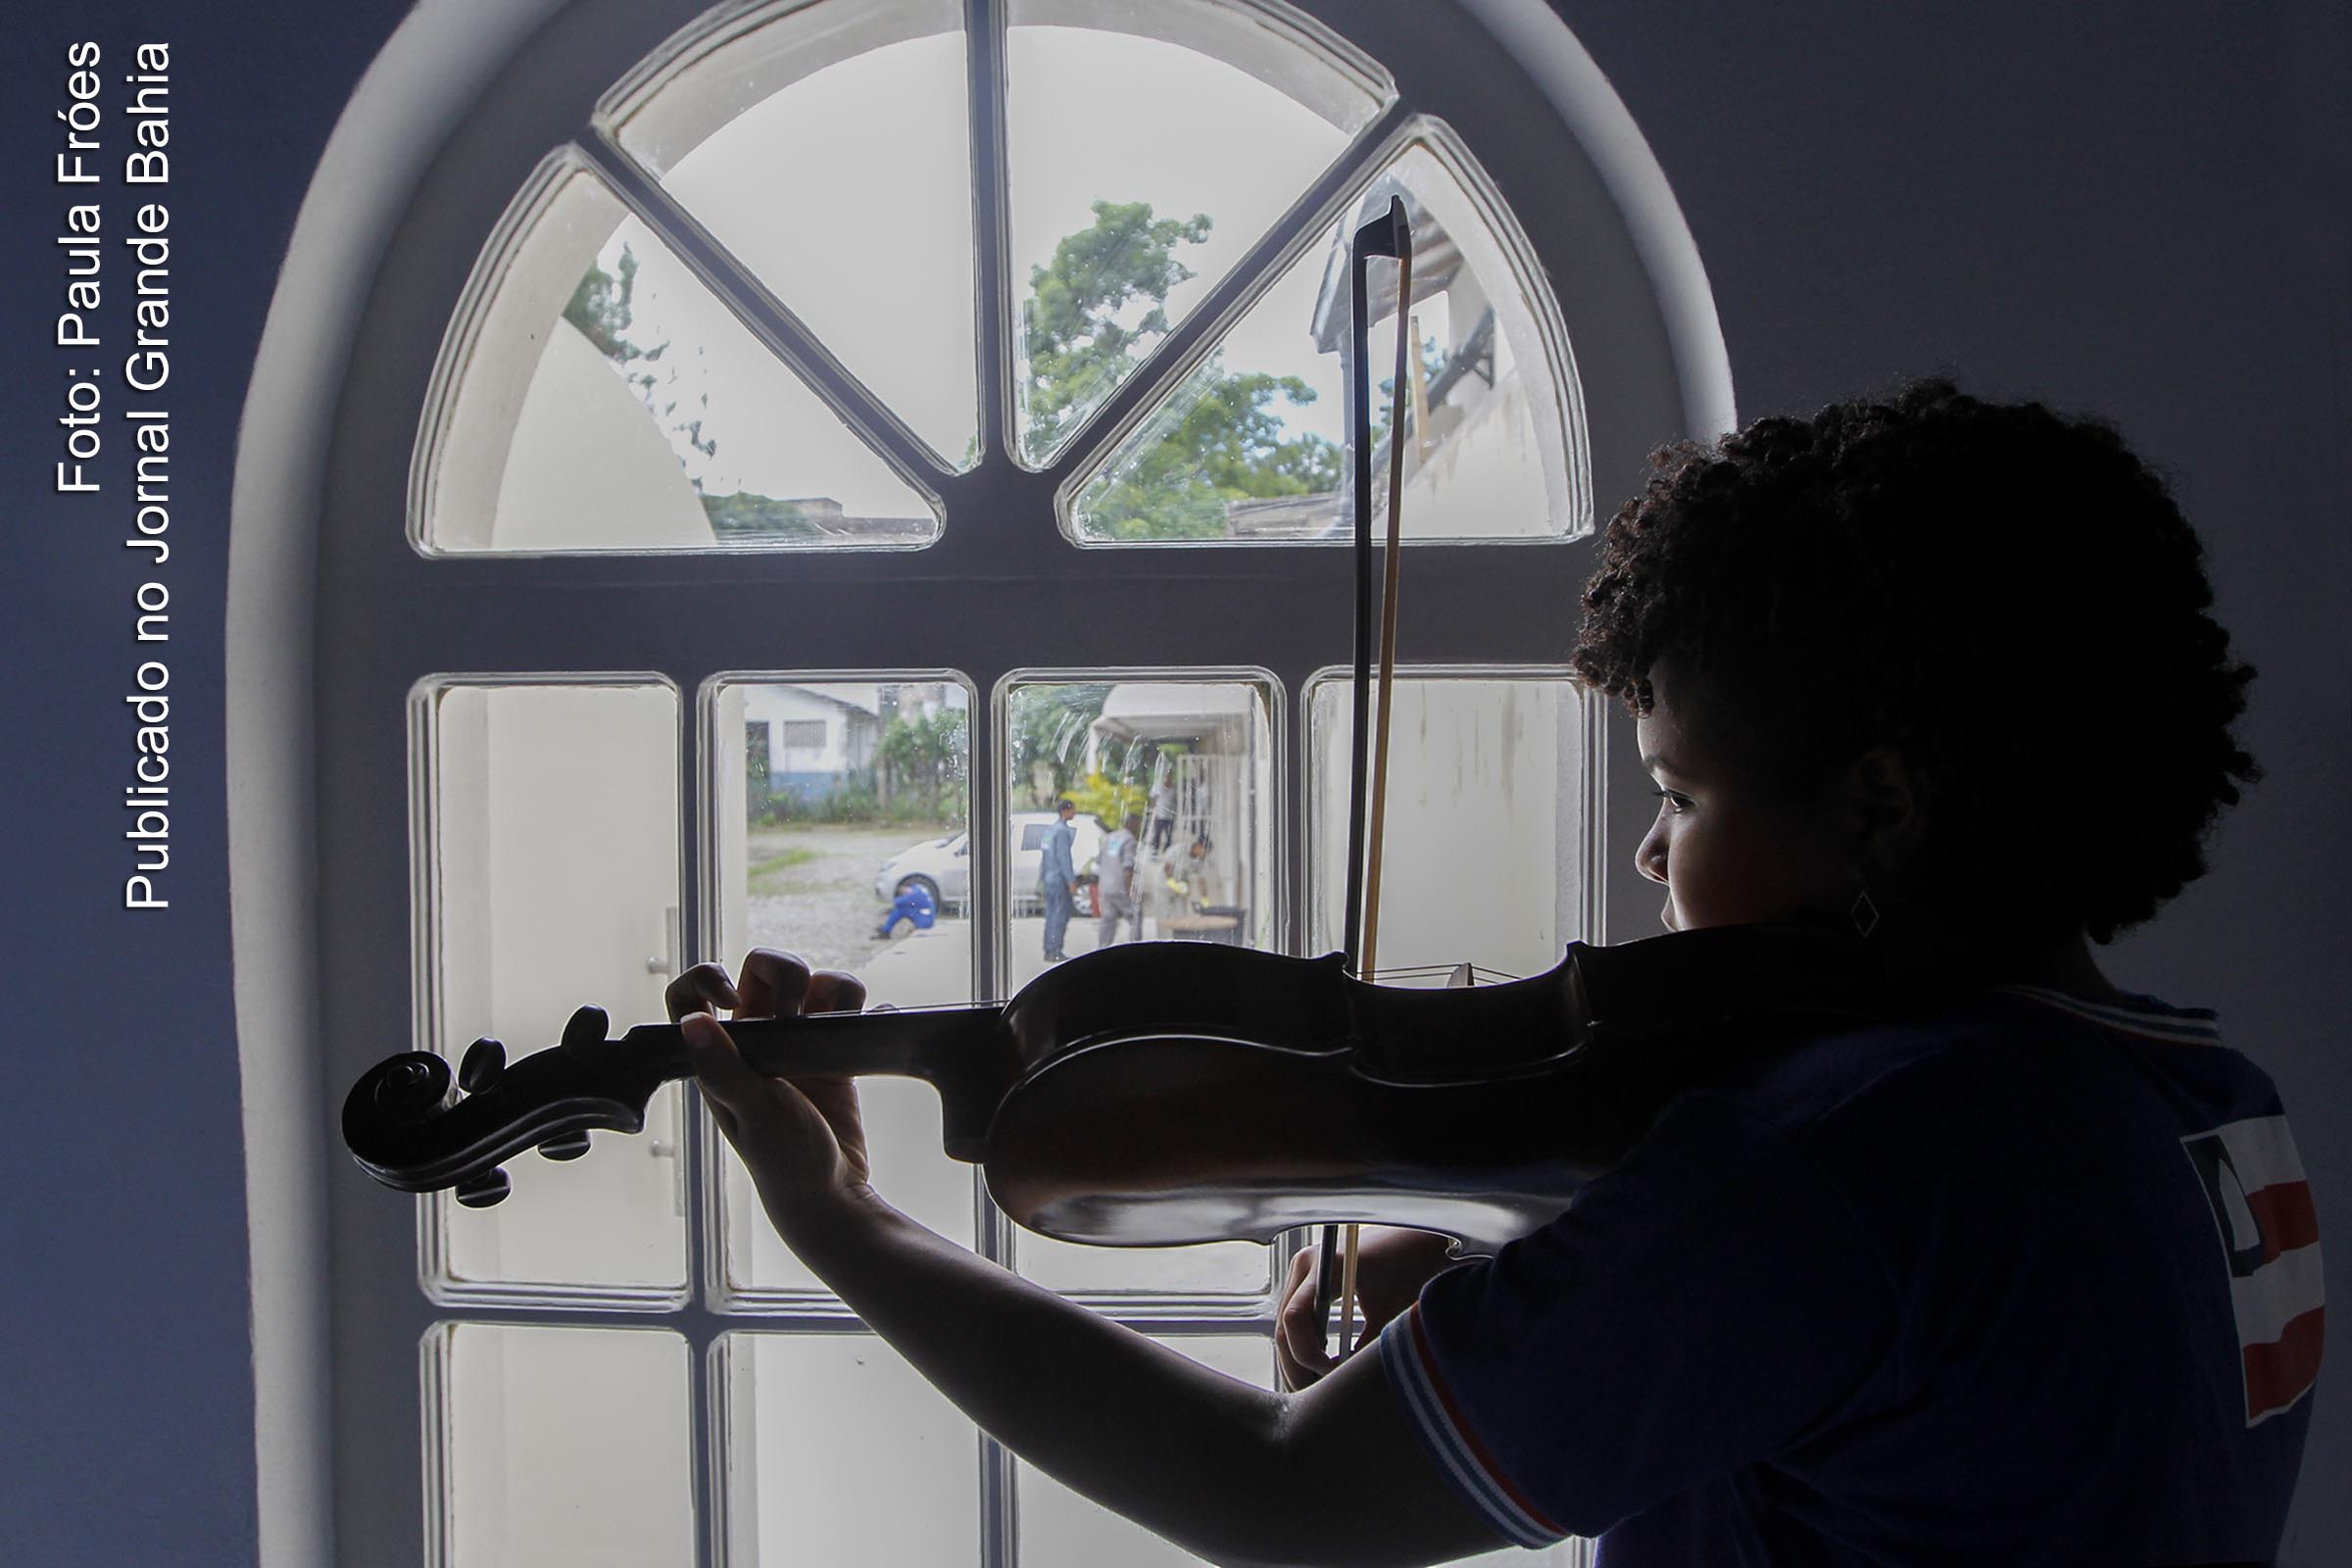 Aluna do projeto NEOJIBA toca violino. 